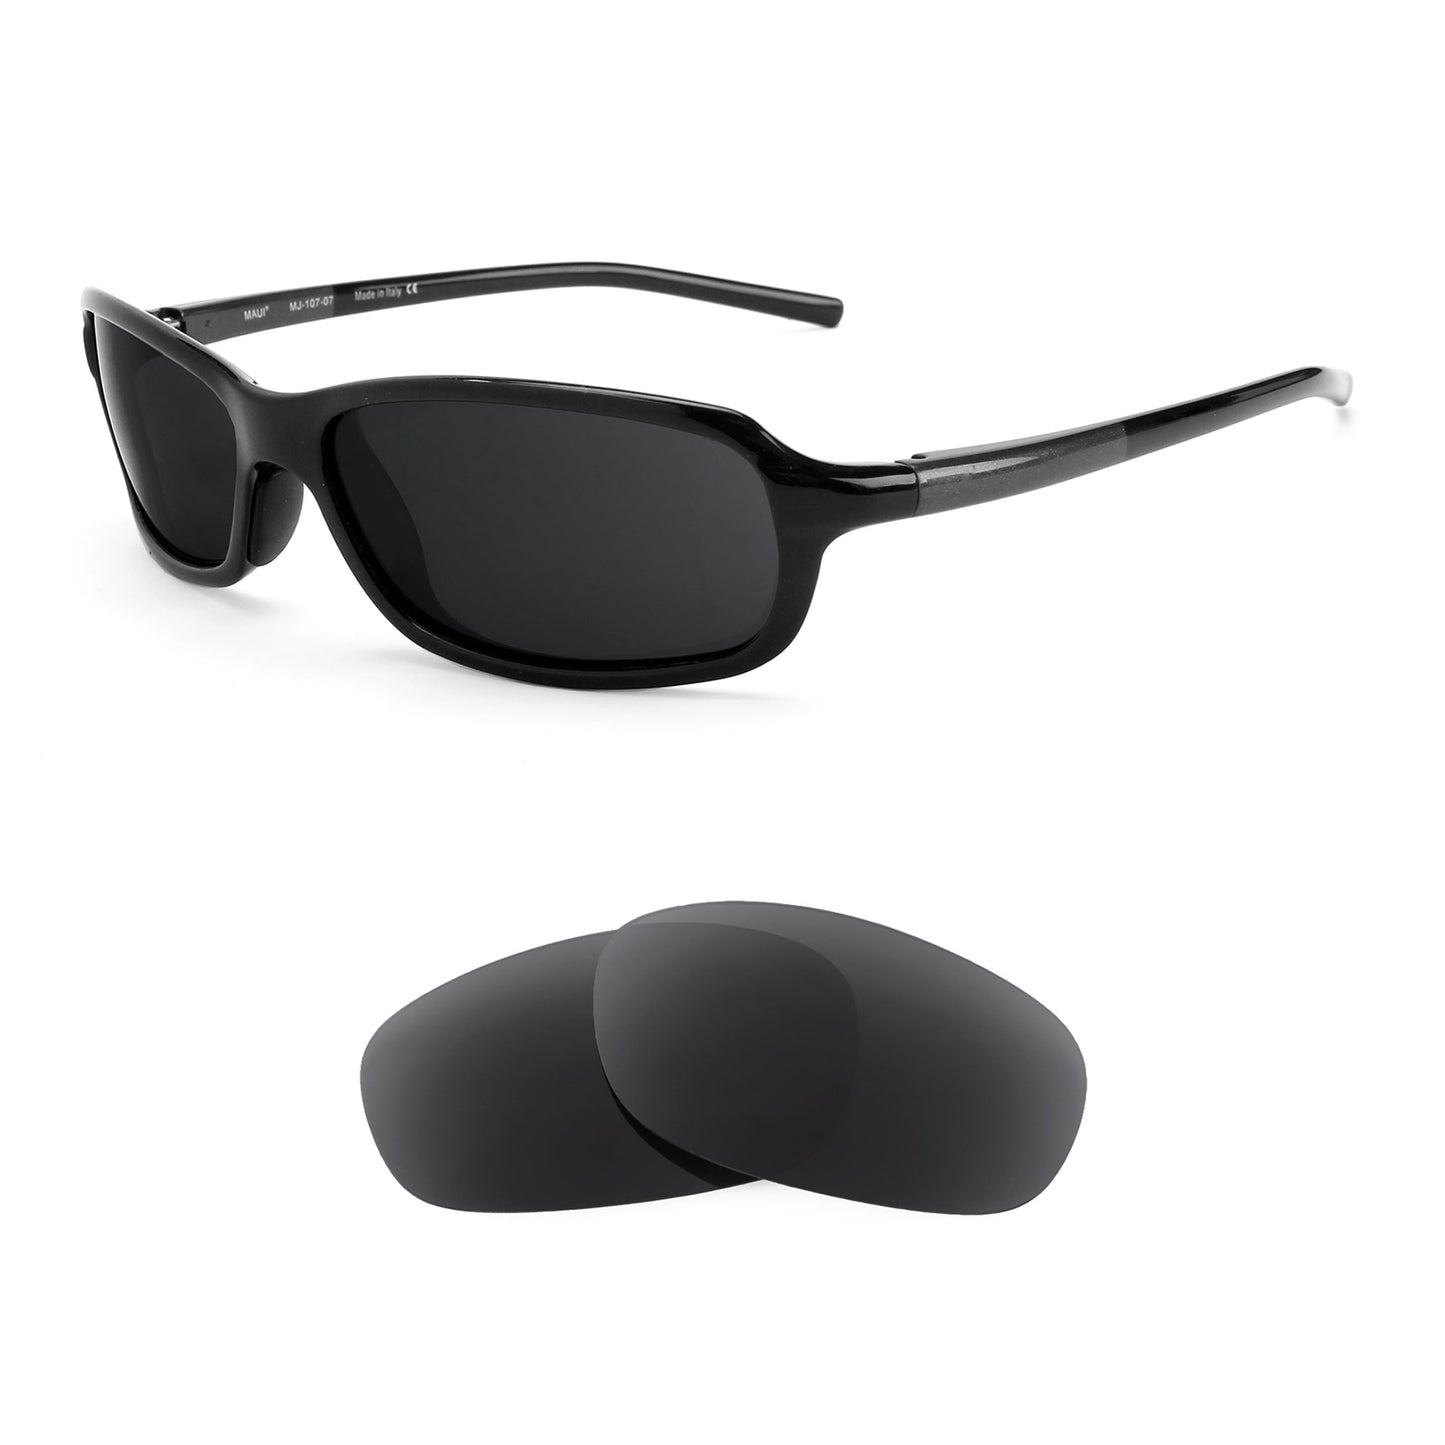 Maui Jim Whitecap MJ107 sunglasses with replacement lenses